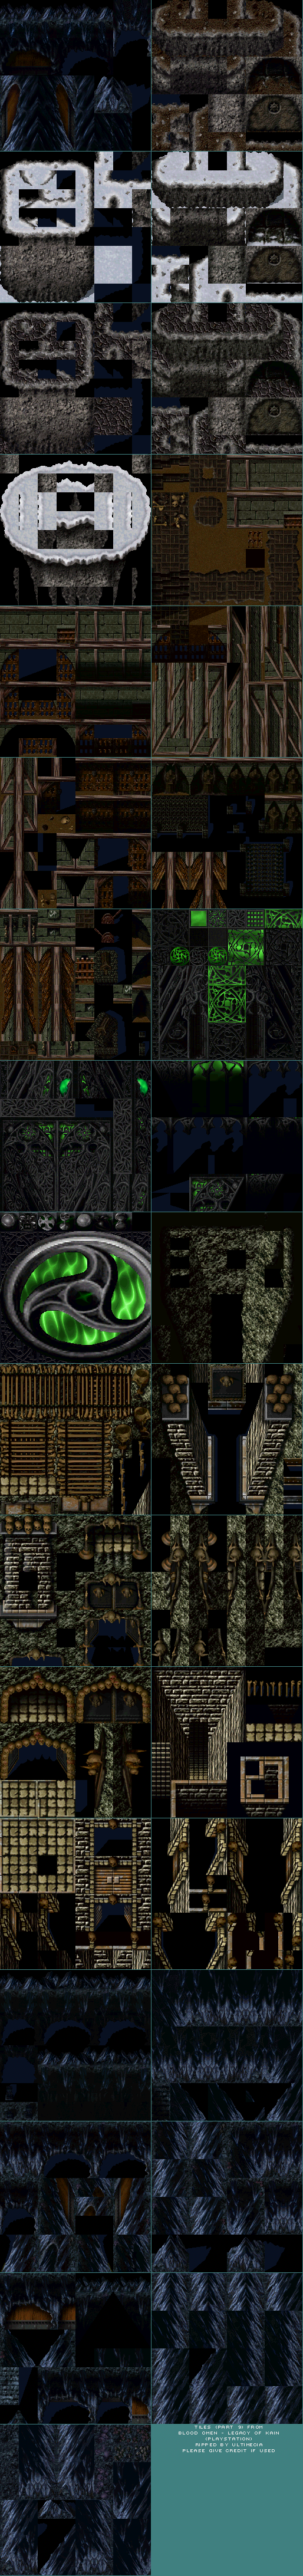 Legacy of Kain: Blood Omen - Tiles 09